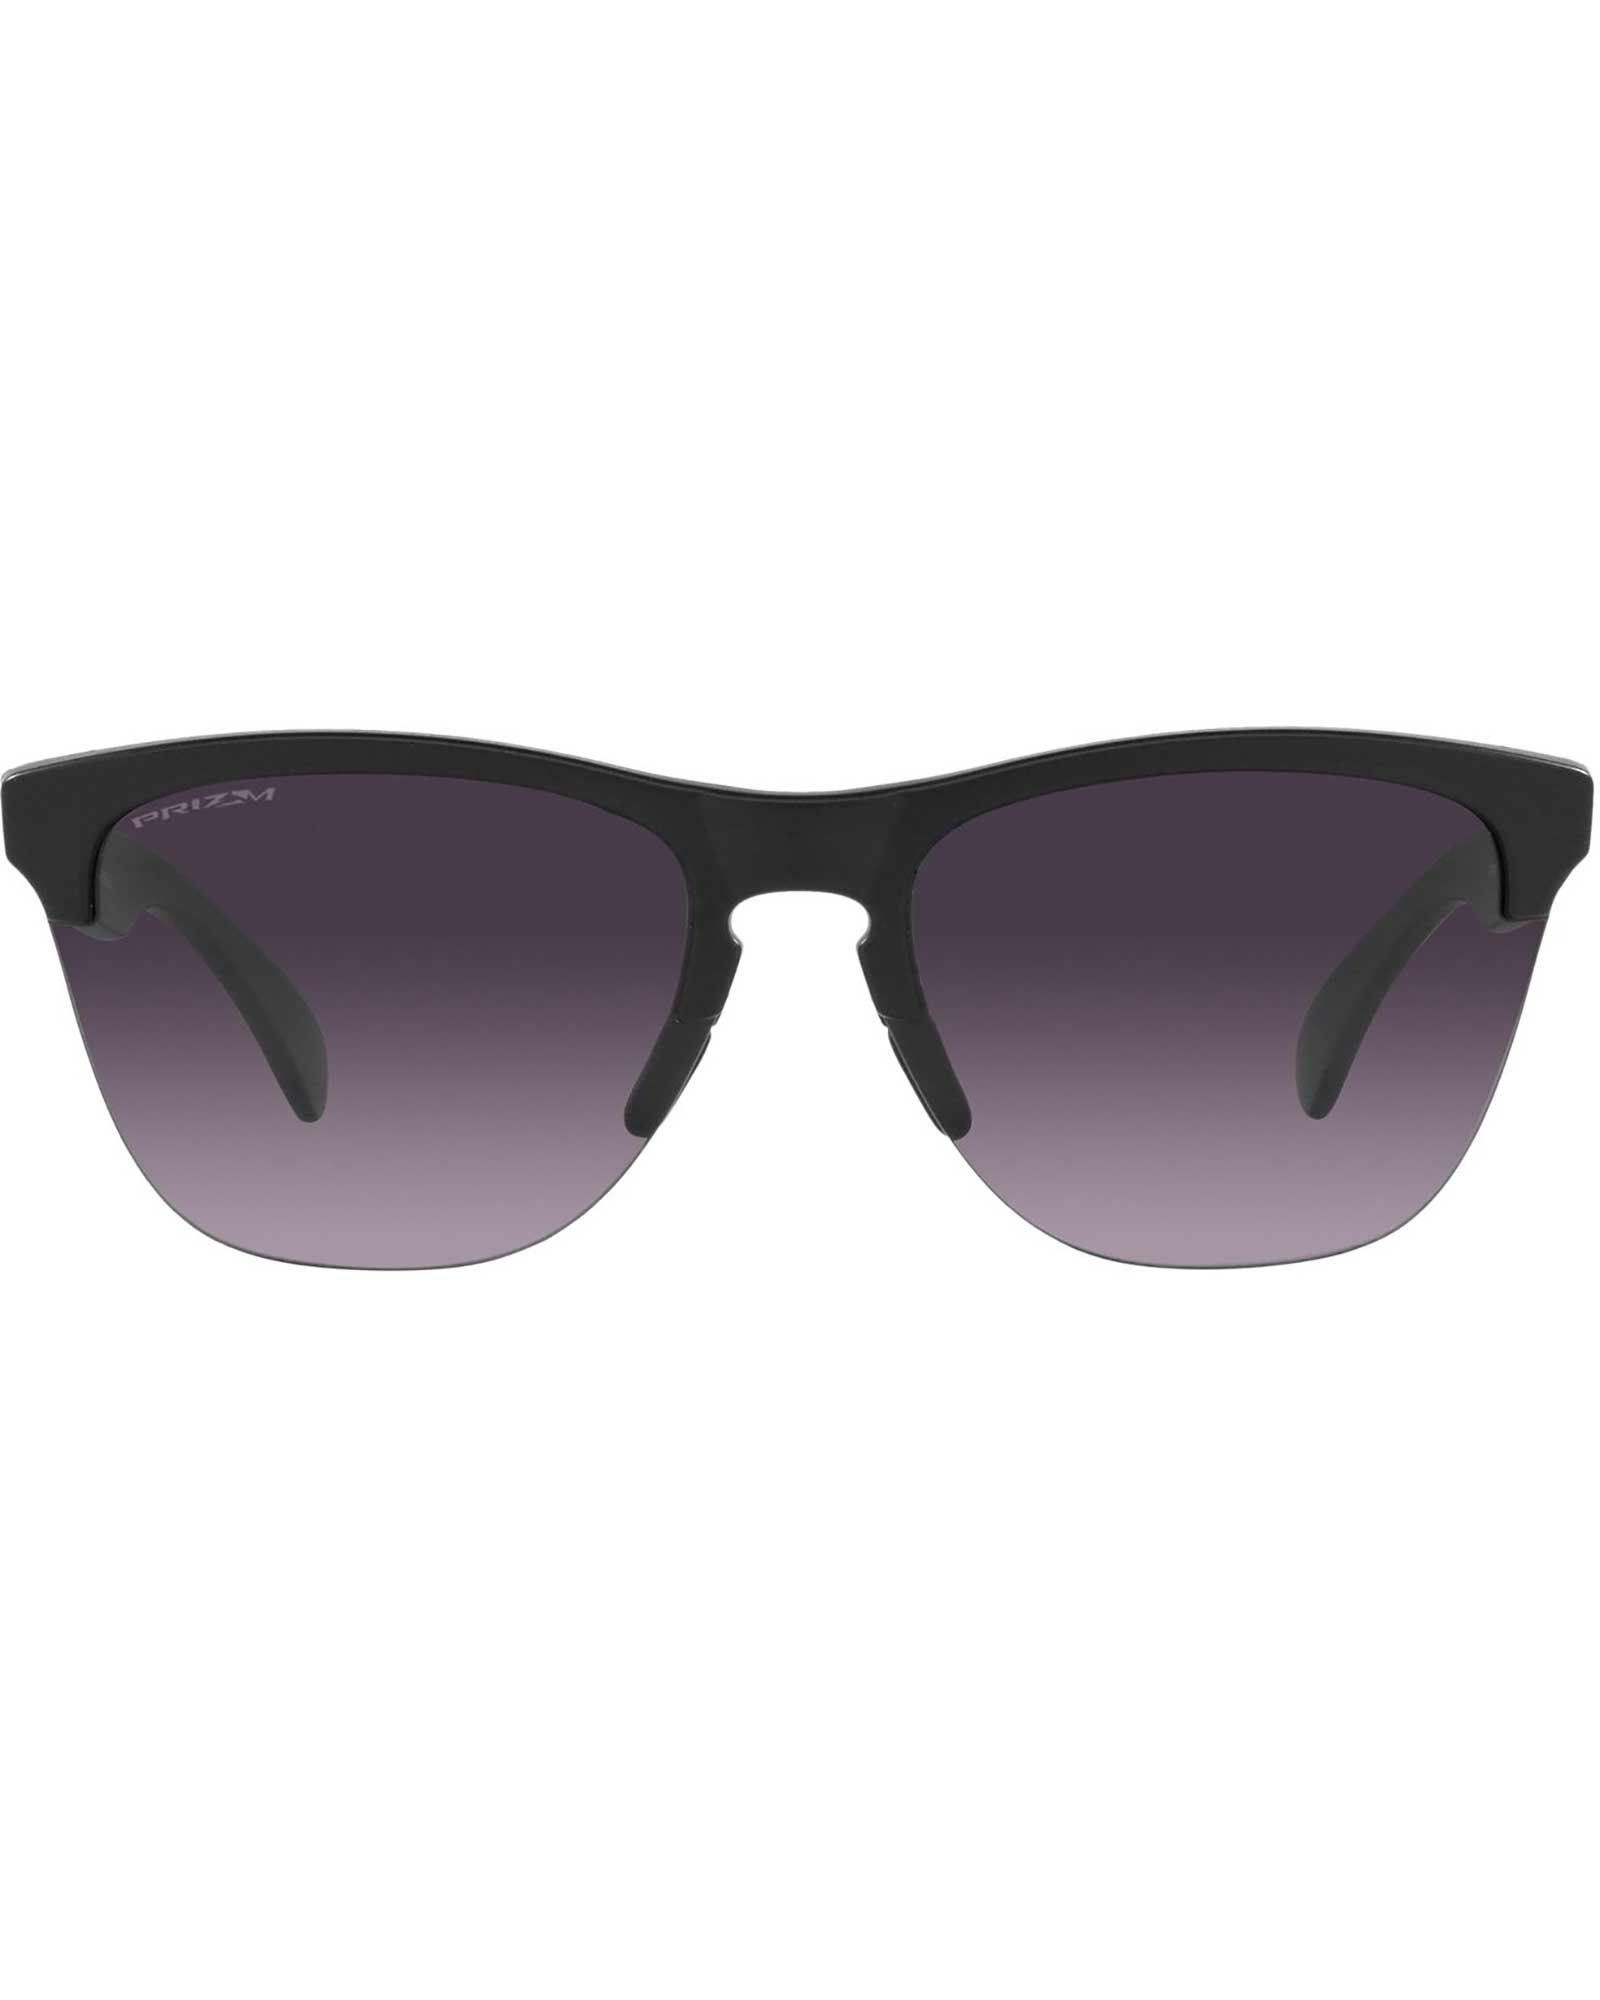 Oakley Frogskins Lite Matte Black / Prizm Grey Gradient Sunglasses - Matte Black